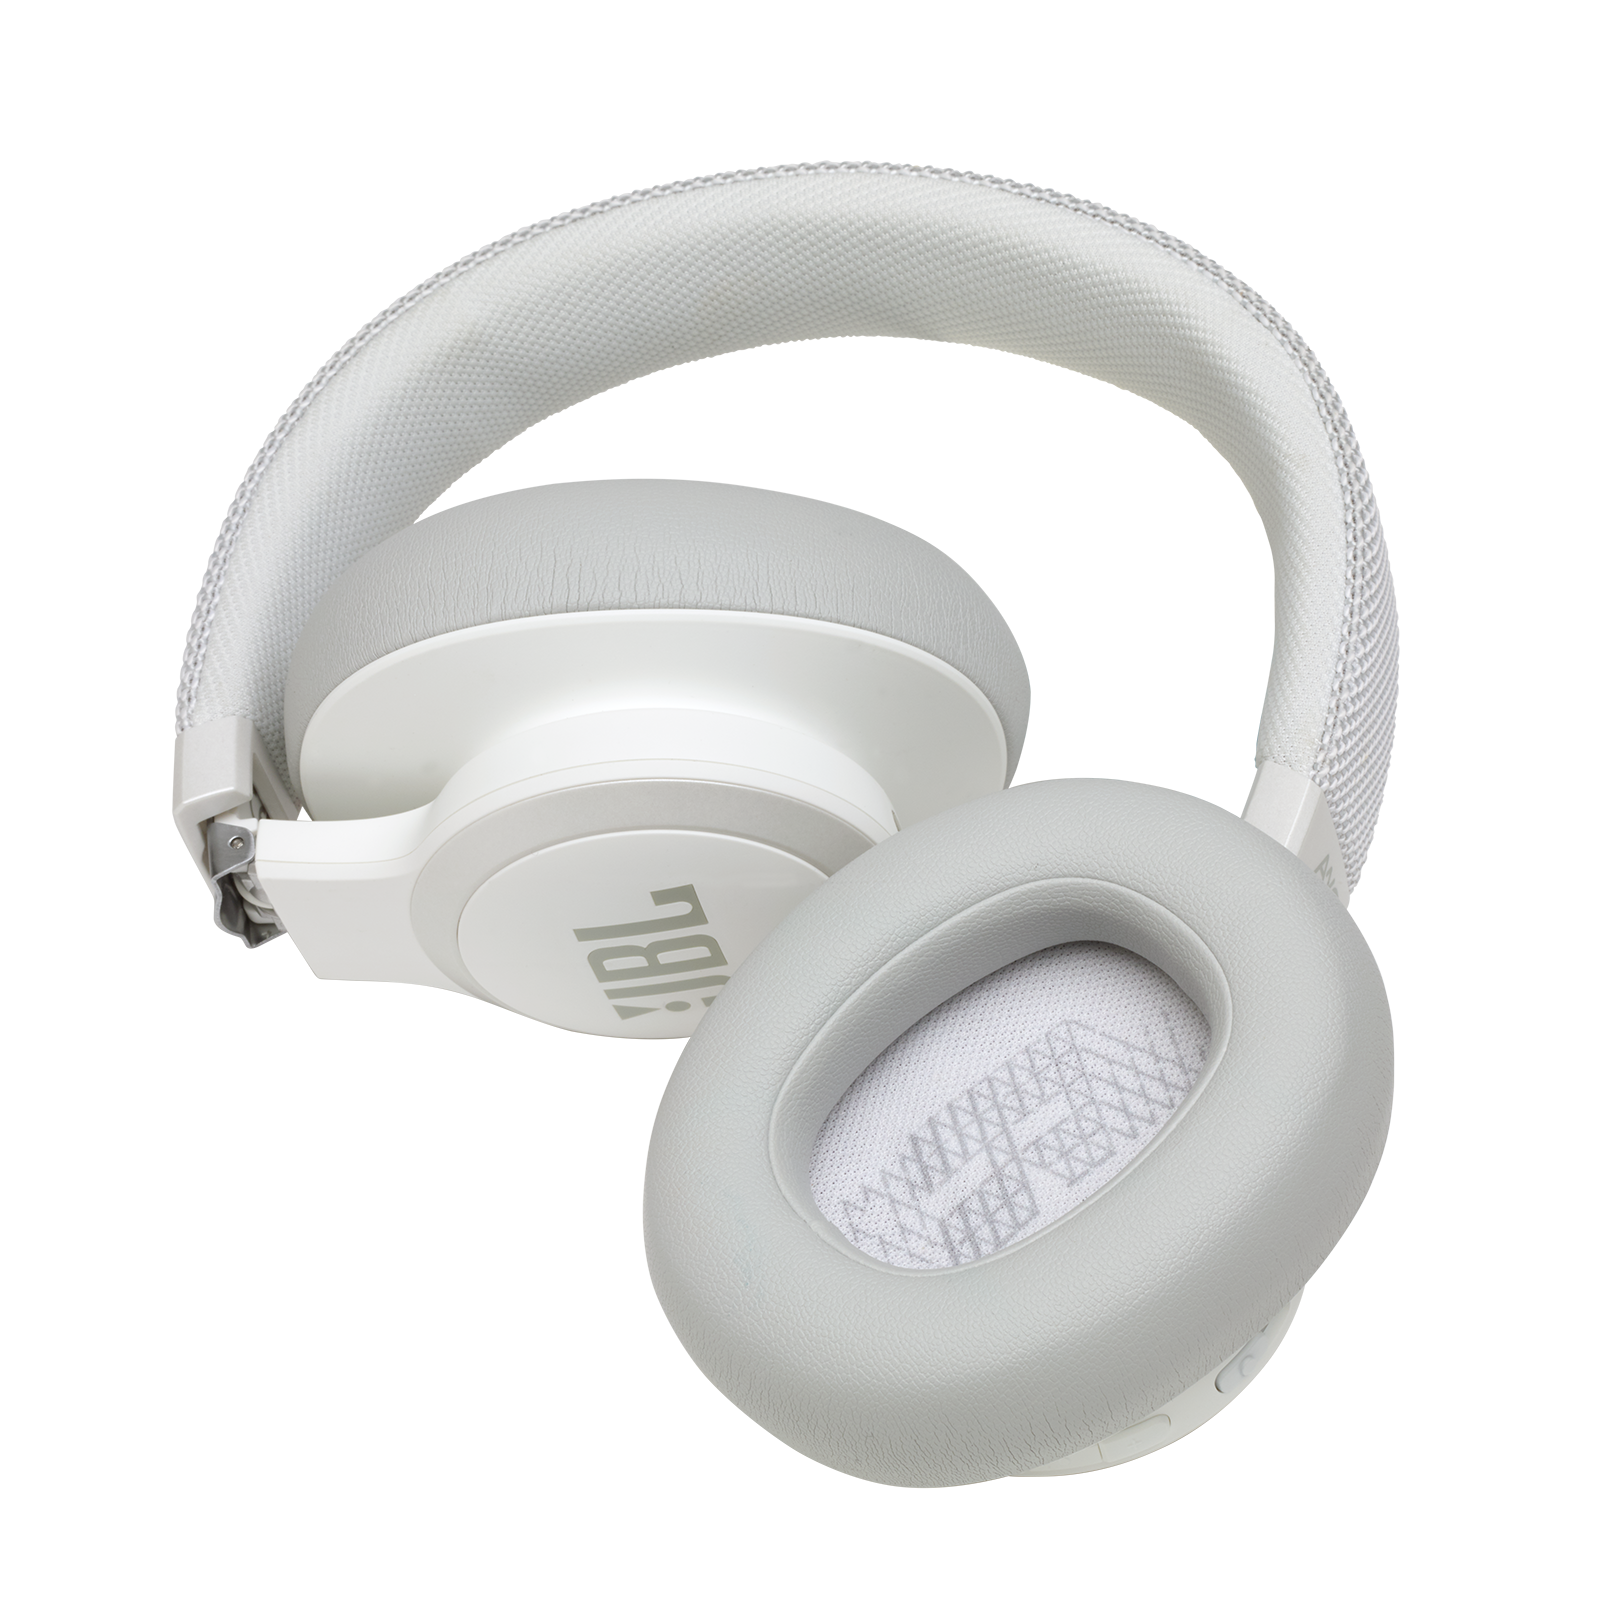 JBL Live 650BTNC - White - Wireless Over-Ear Noise-Cancelling Headphones - Detailshot 7